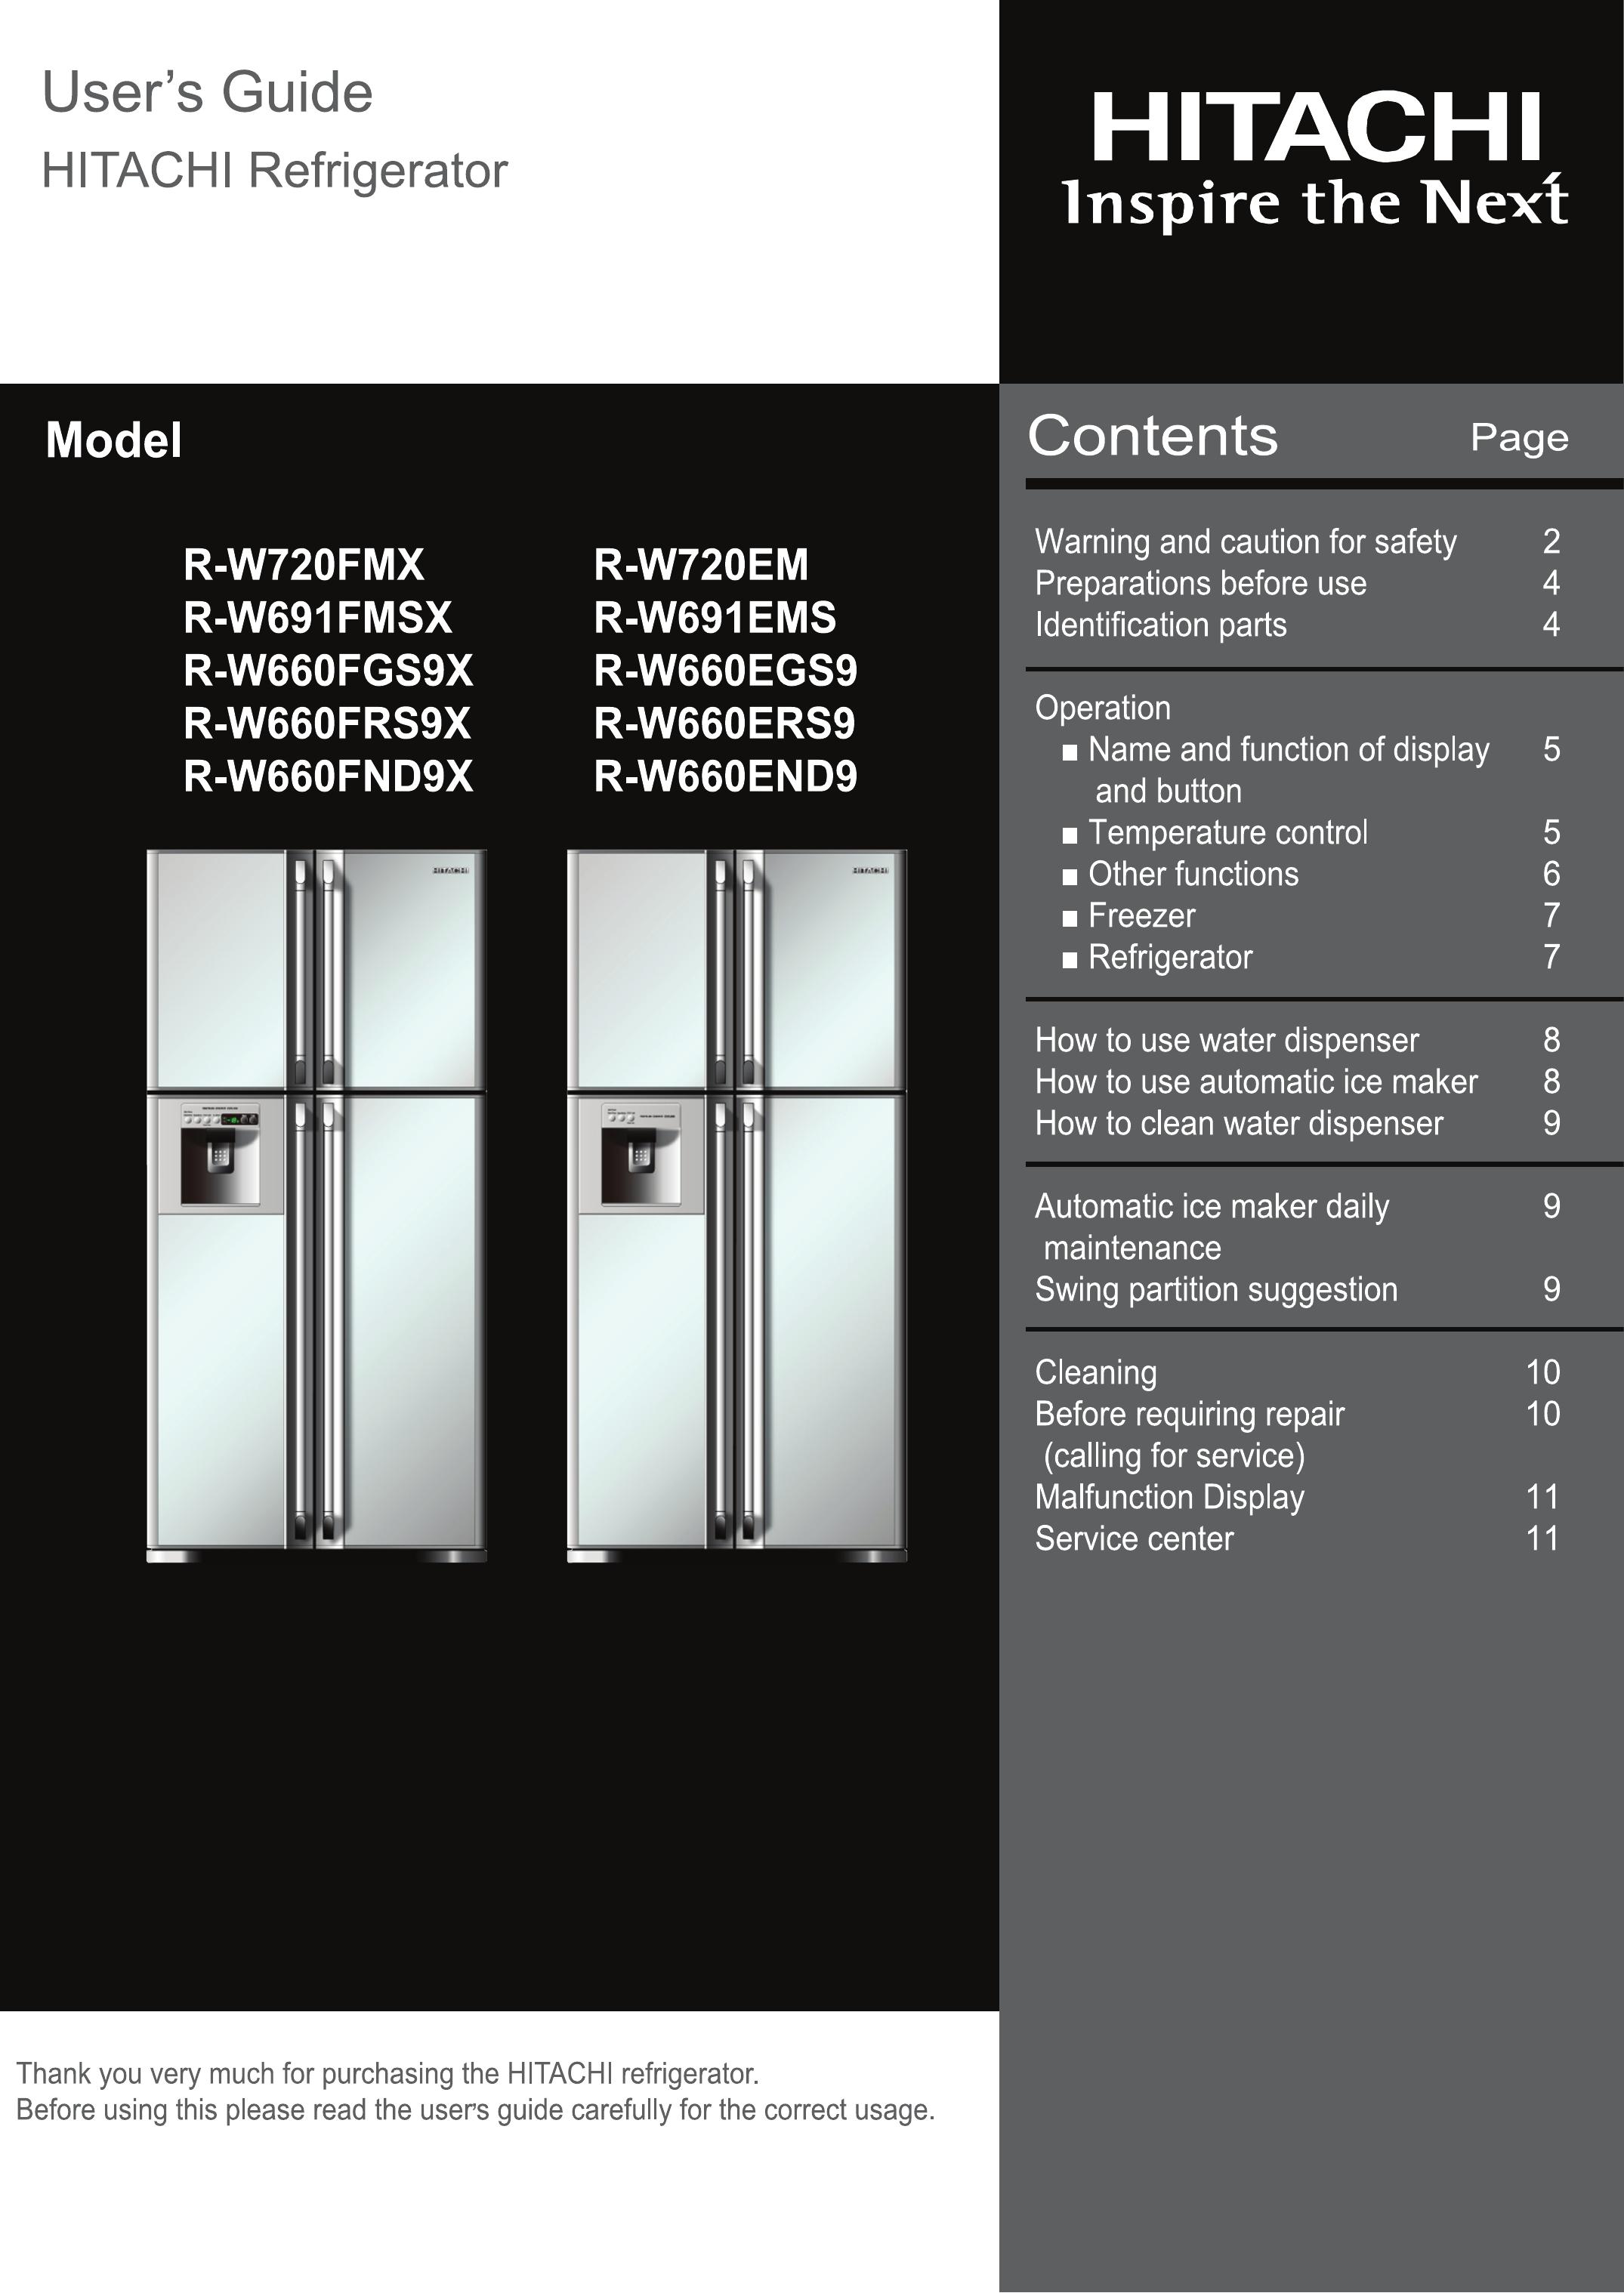 Hitachi R-W660ERS9 Refrigerator User Manual